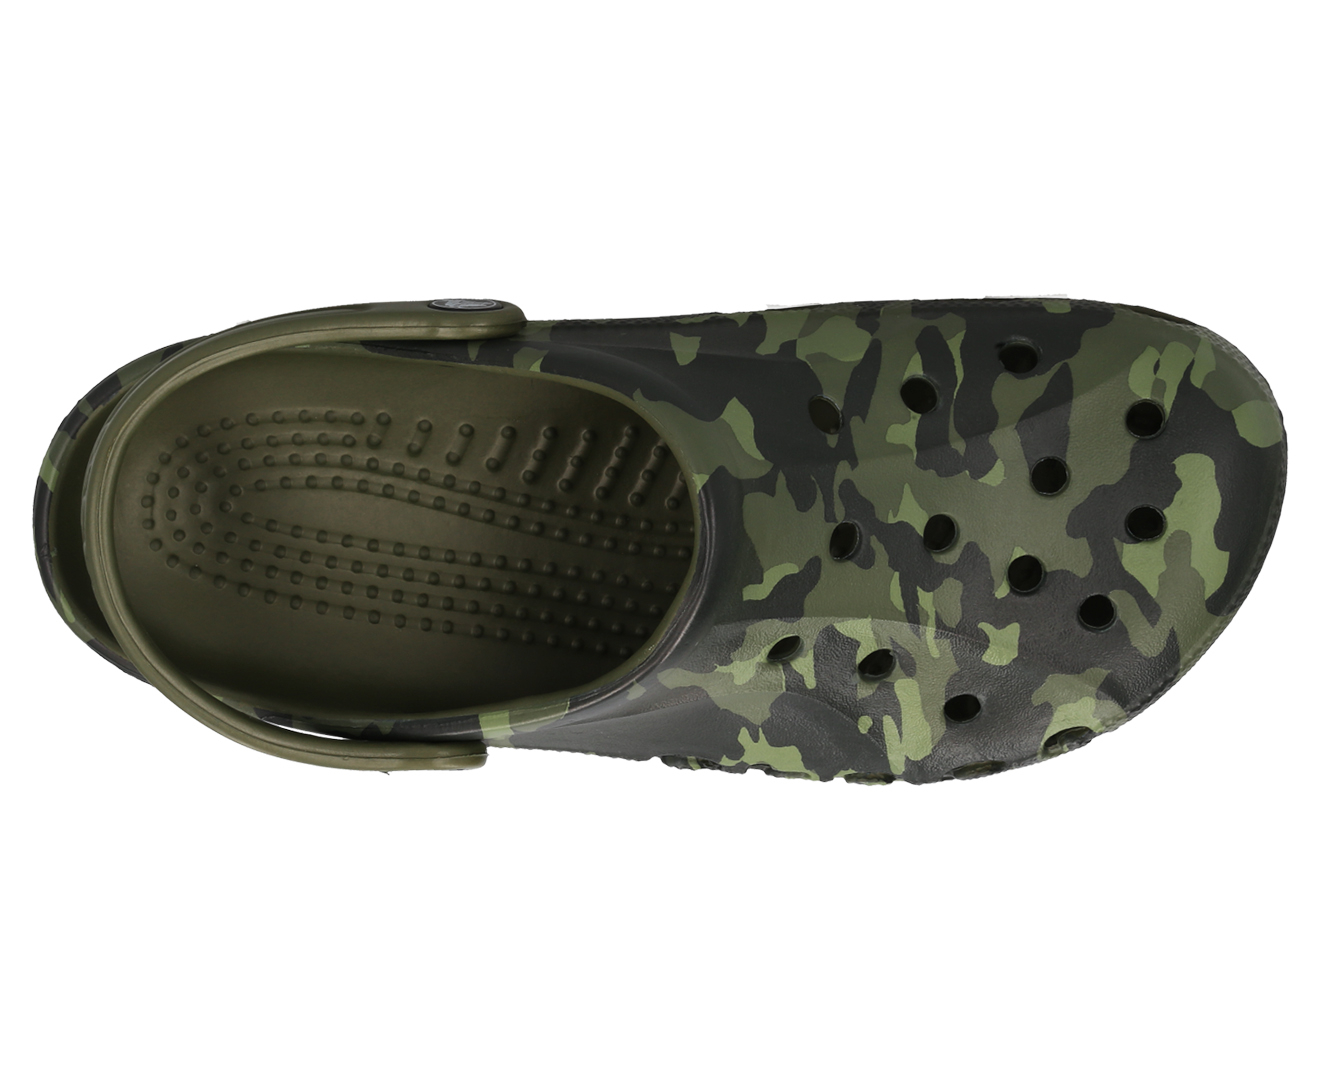 Crocs Baya Seasonal Graphic Clogs - Army Green Camo | Catch.com.au